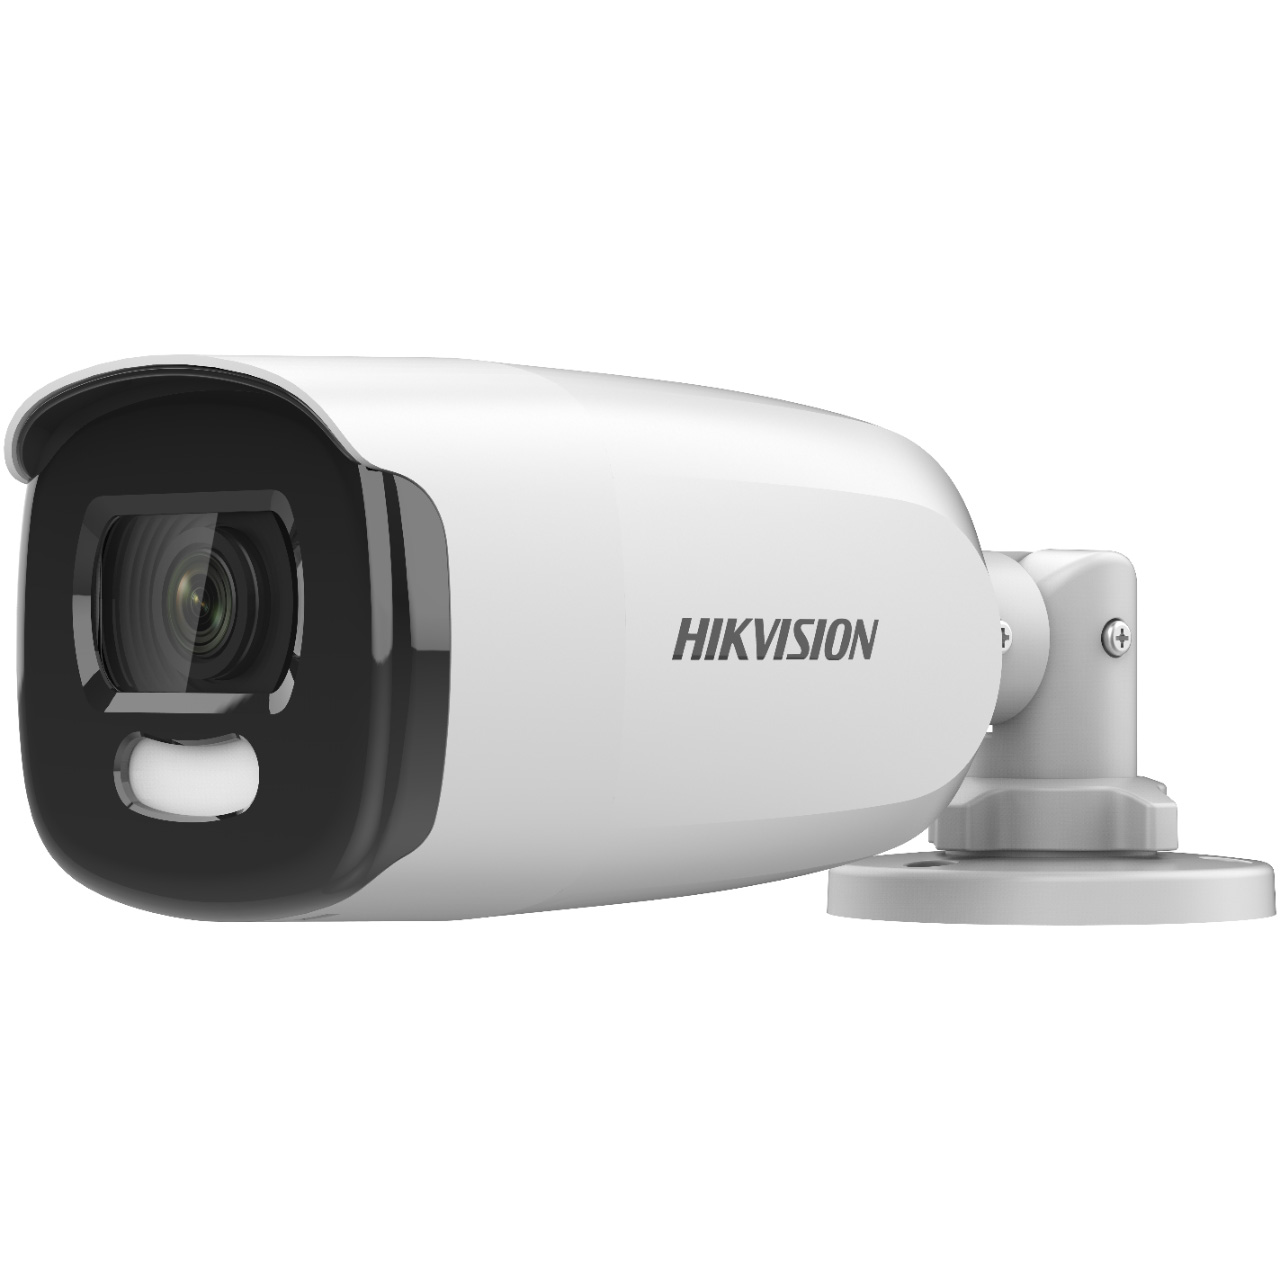 Hikvision DS-2CE12HFT-F28(2.8mm) - 5MP TVI kamera u bullet kućištu sa ColorVu tehnologijom 4 u 1 TVI/AHD/CVI/CVBS režim.